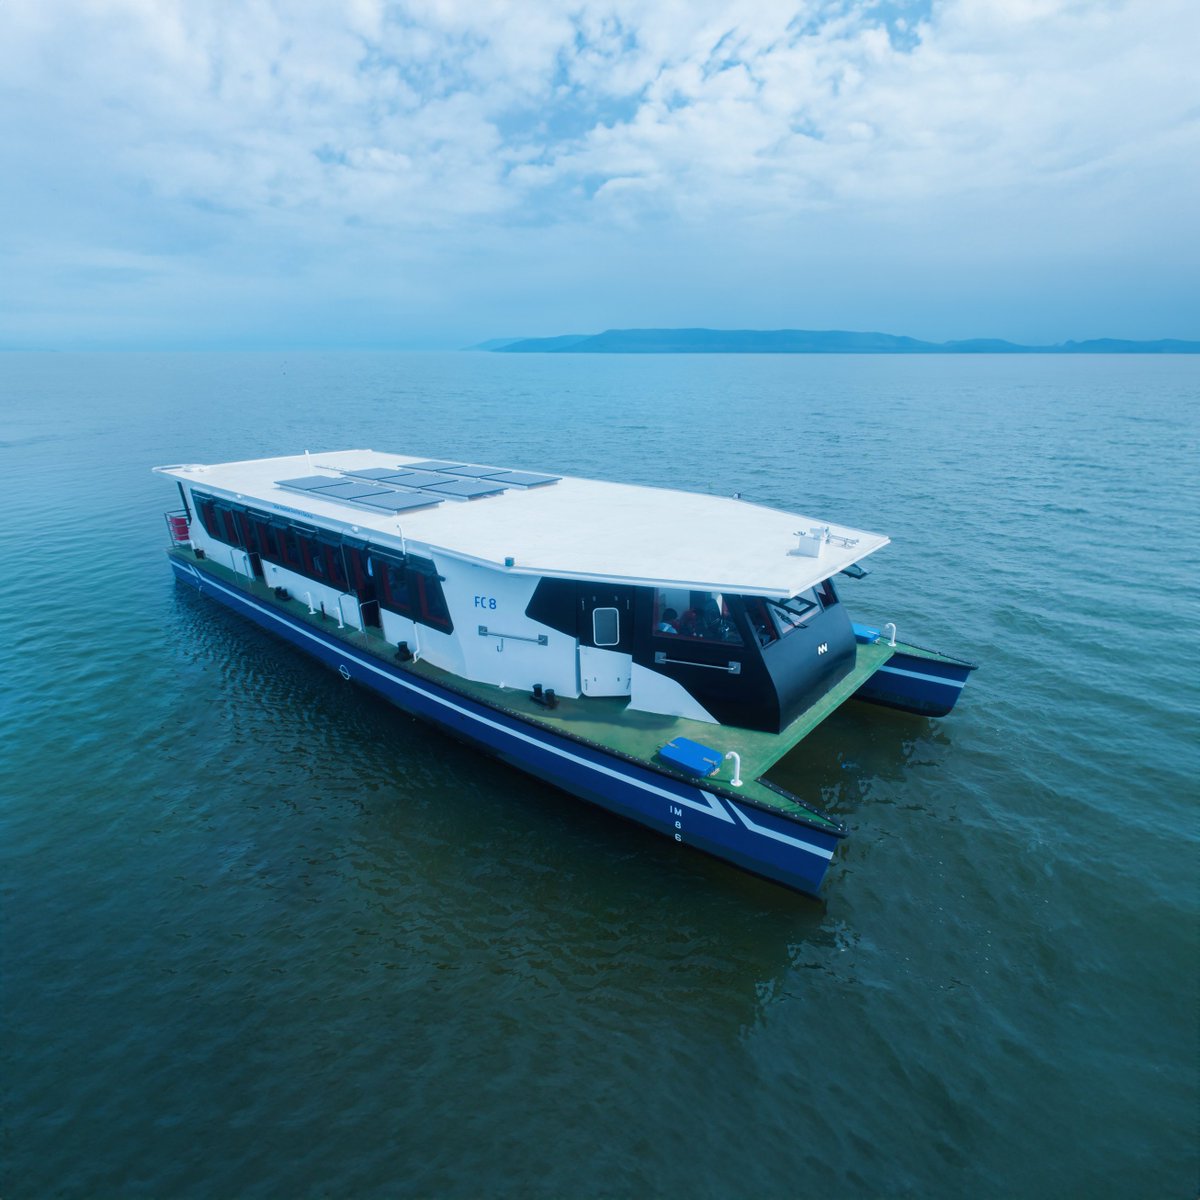 Riveiere - A floating beauty with solar whispers gliding through Kerala's waterways.

#kerala #ferry #boats #passengertransport #waterways #riveiere #navalt